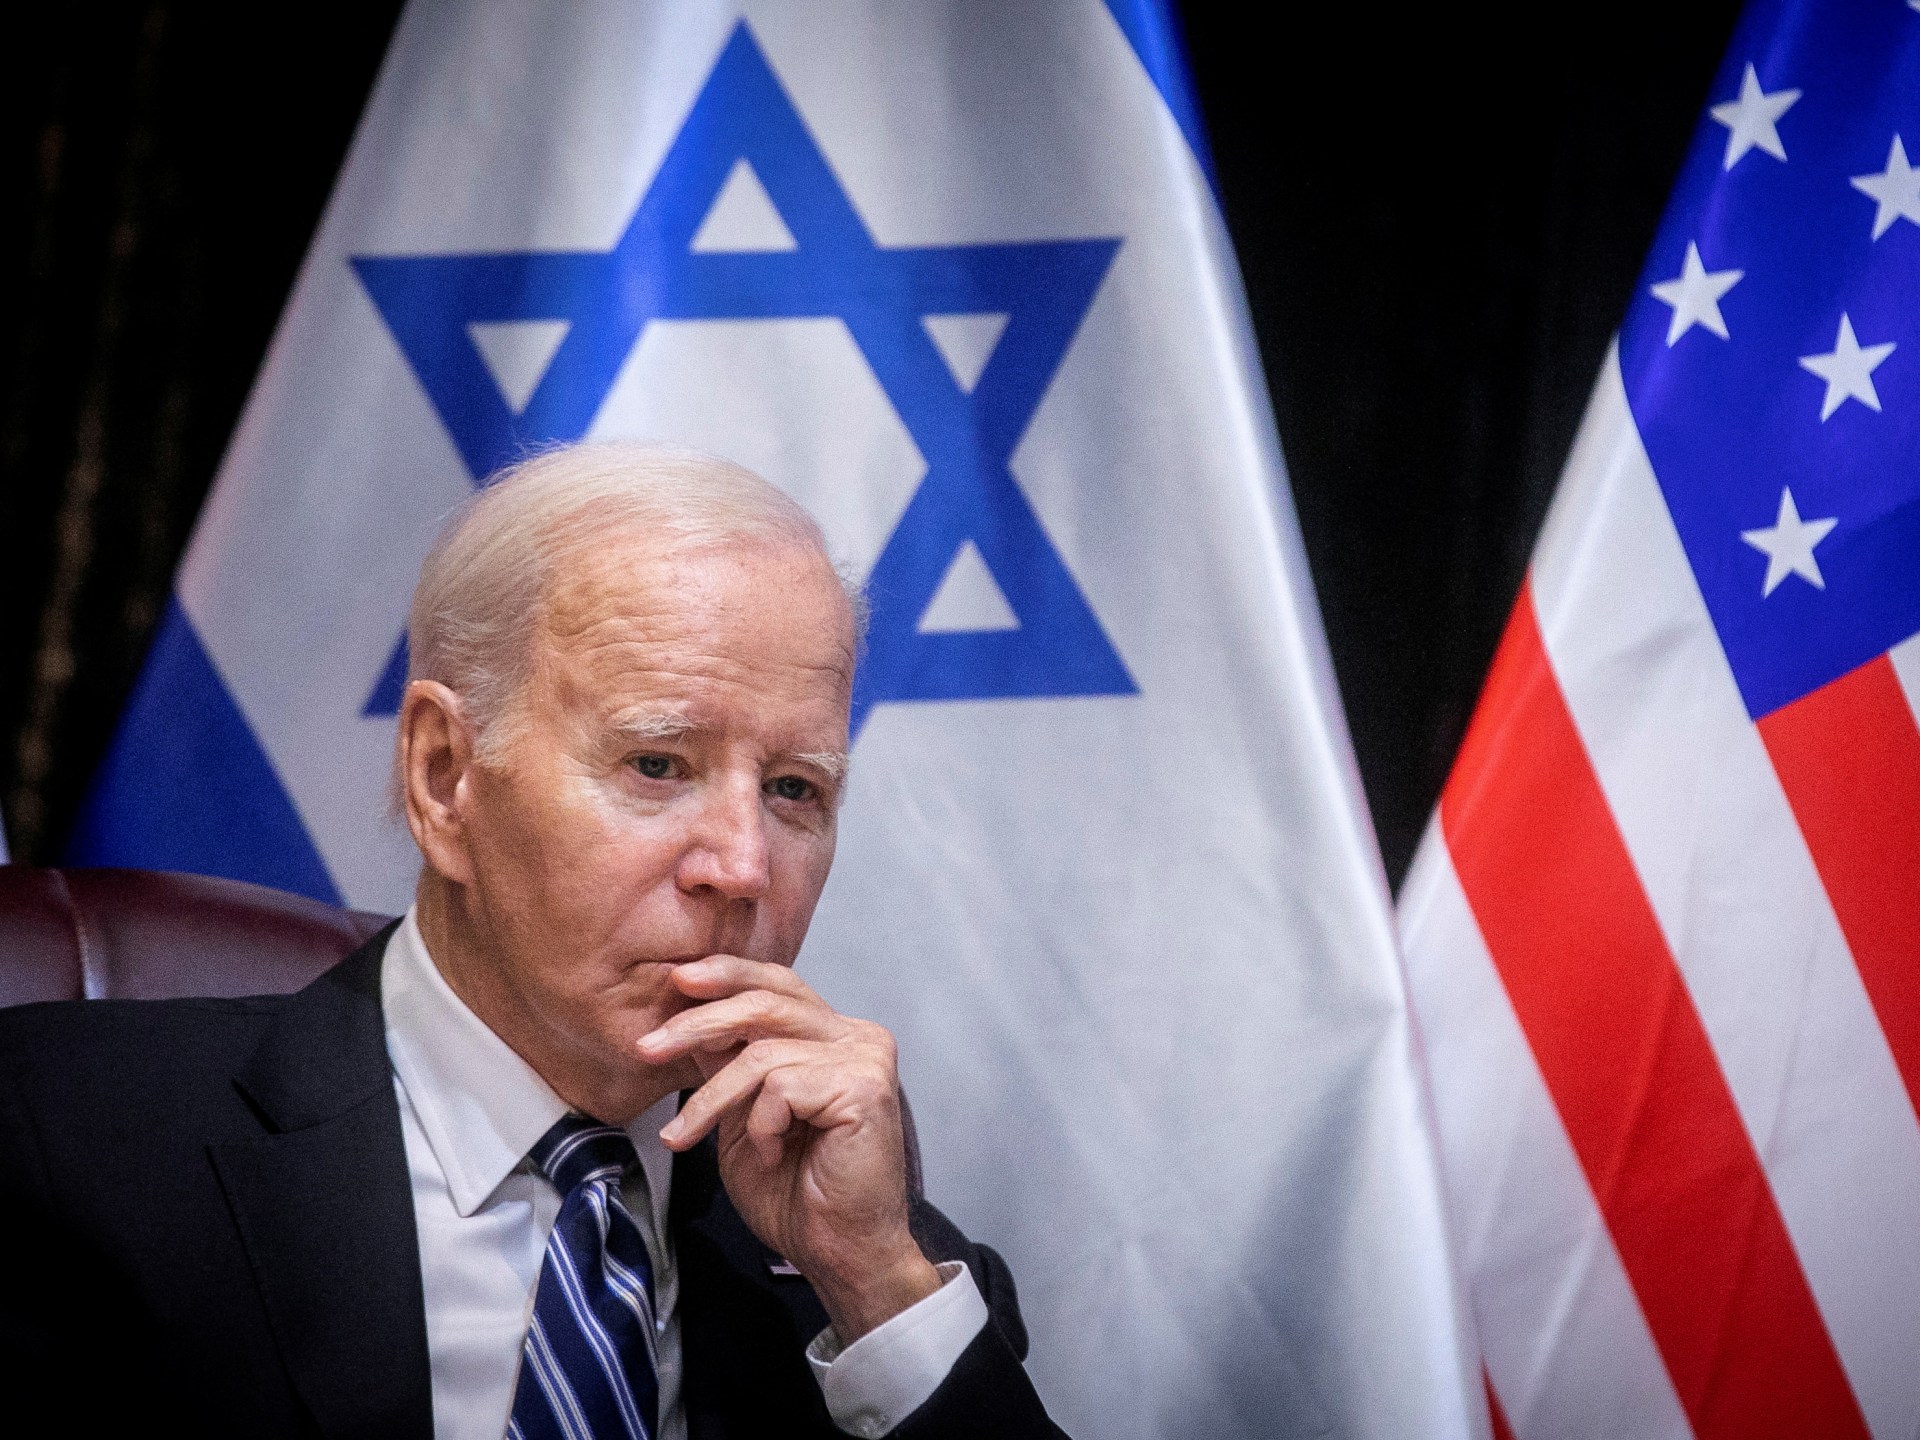 Biden’s Israel trip displays ‘performative’ approach to Gaza war: analysts